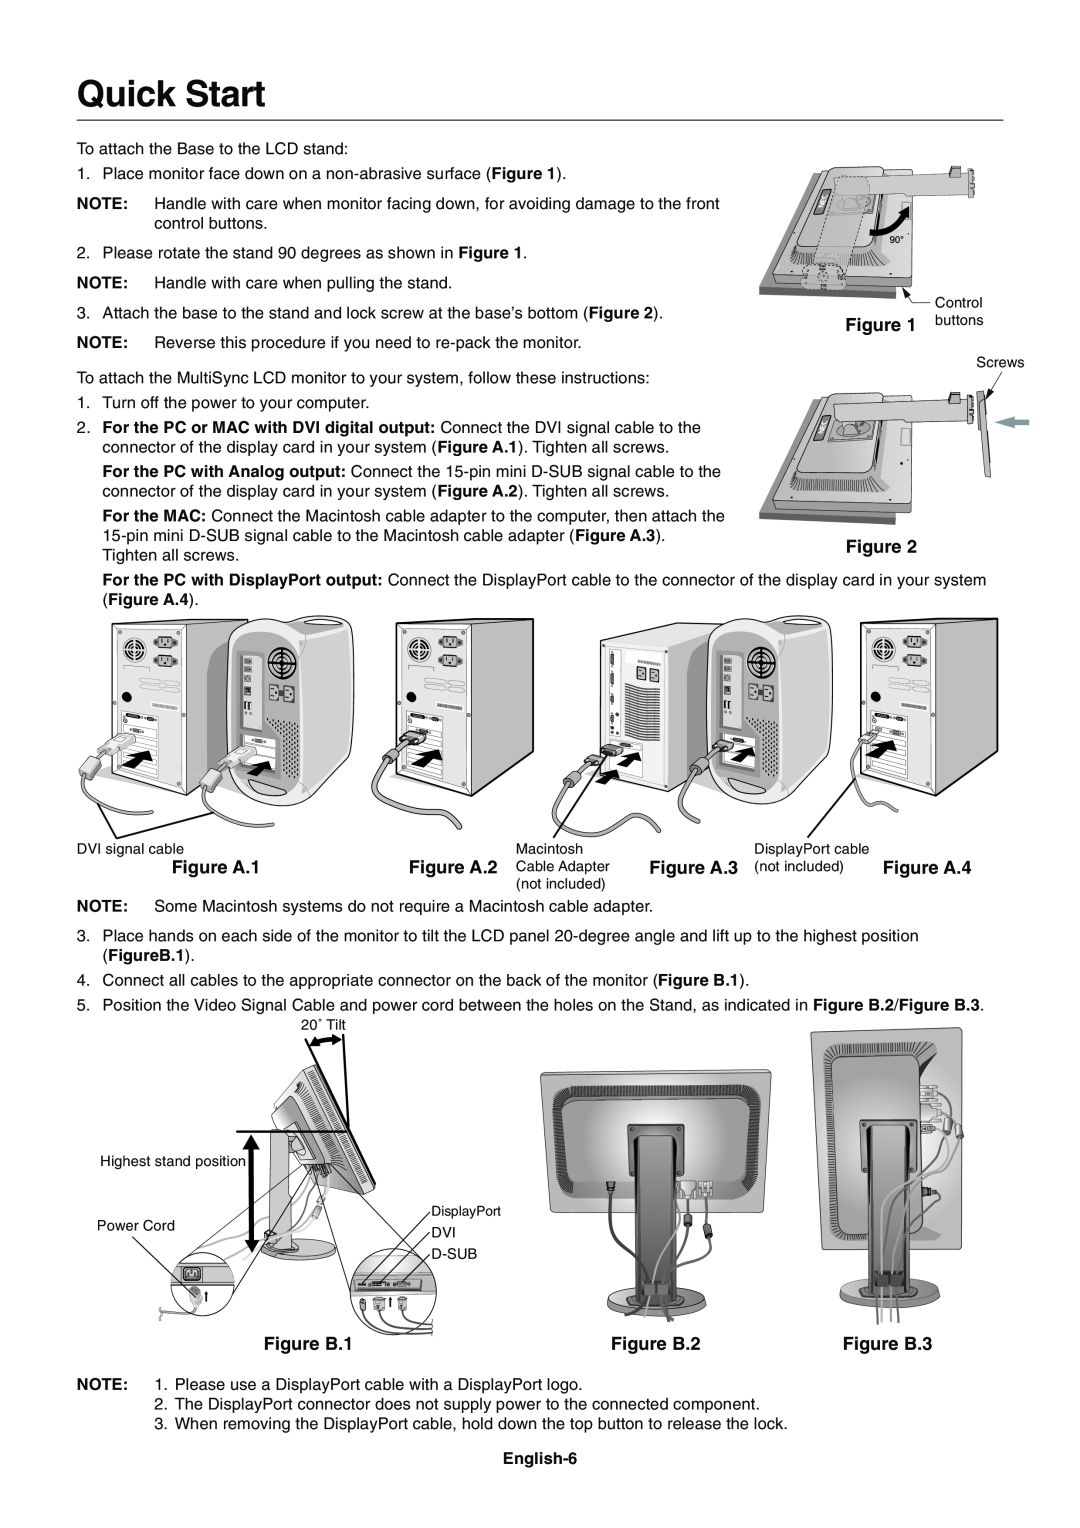 NEC E201W user manual Quick Start, Figure A.1, Figure A.4, Figure B.1, Figure B.2, Figure B.3 